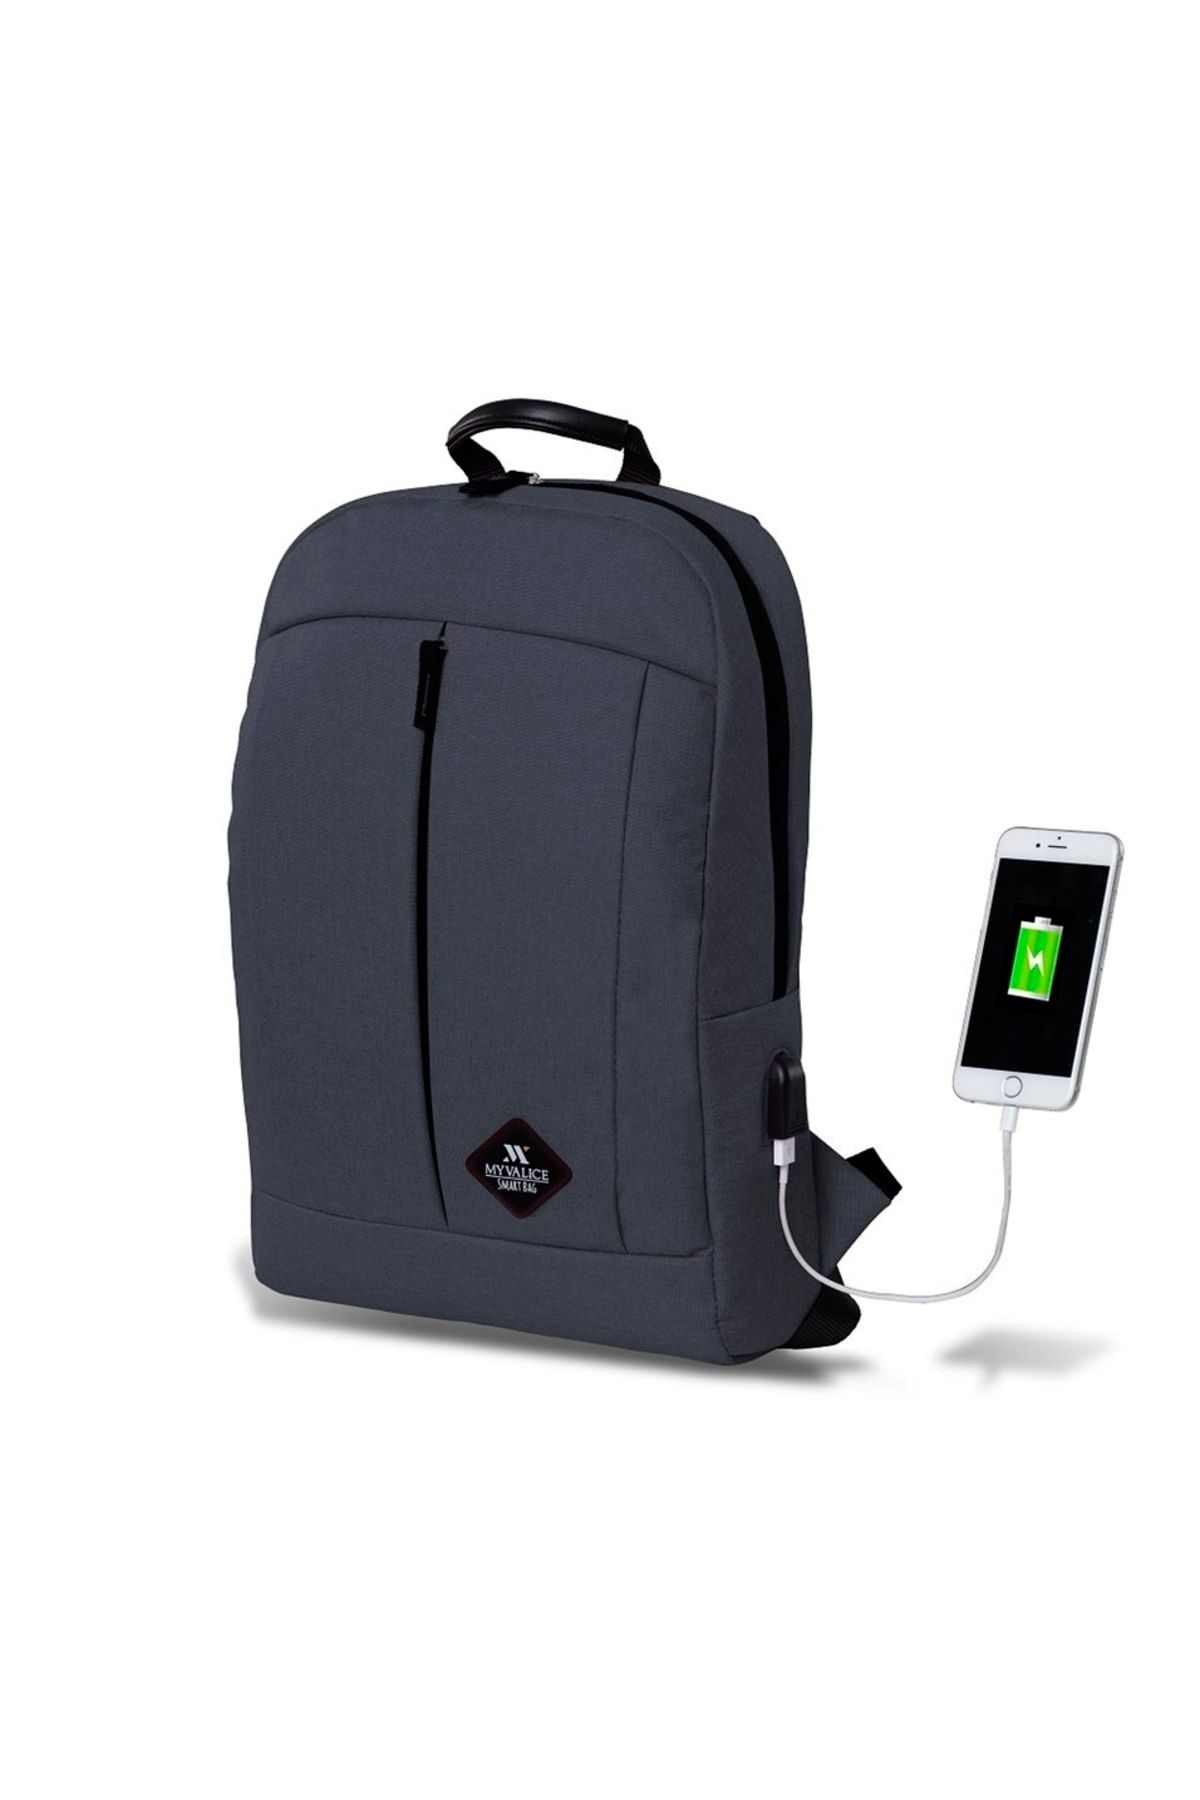 Smart Bag Galaxy Usb Şarj Girişli Notebook Laptop Sırt Çantası Füme